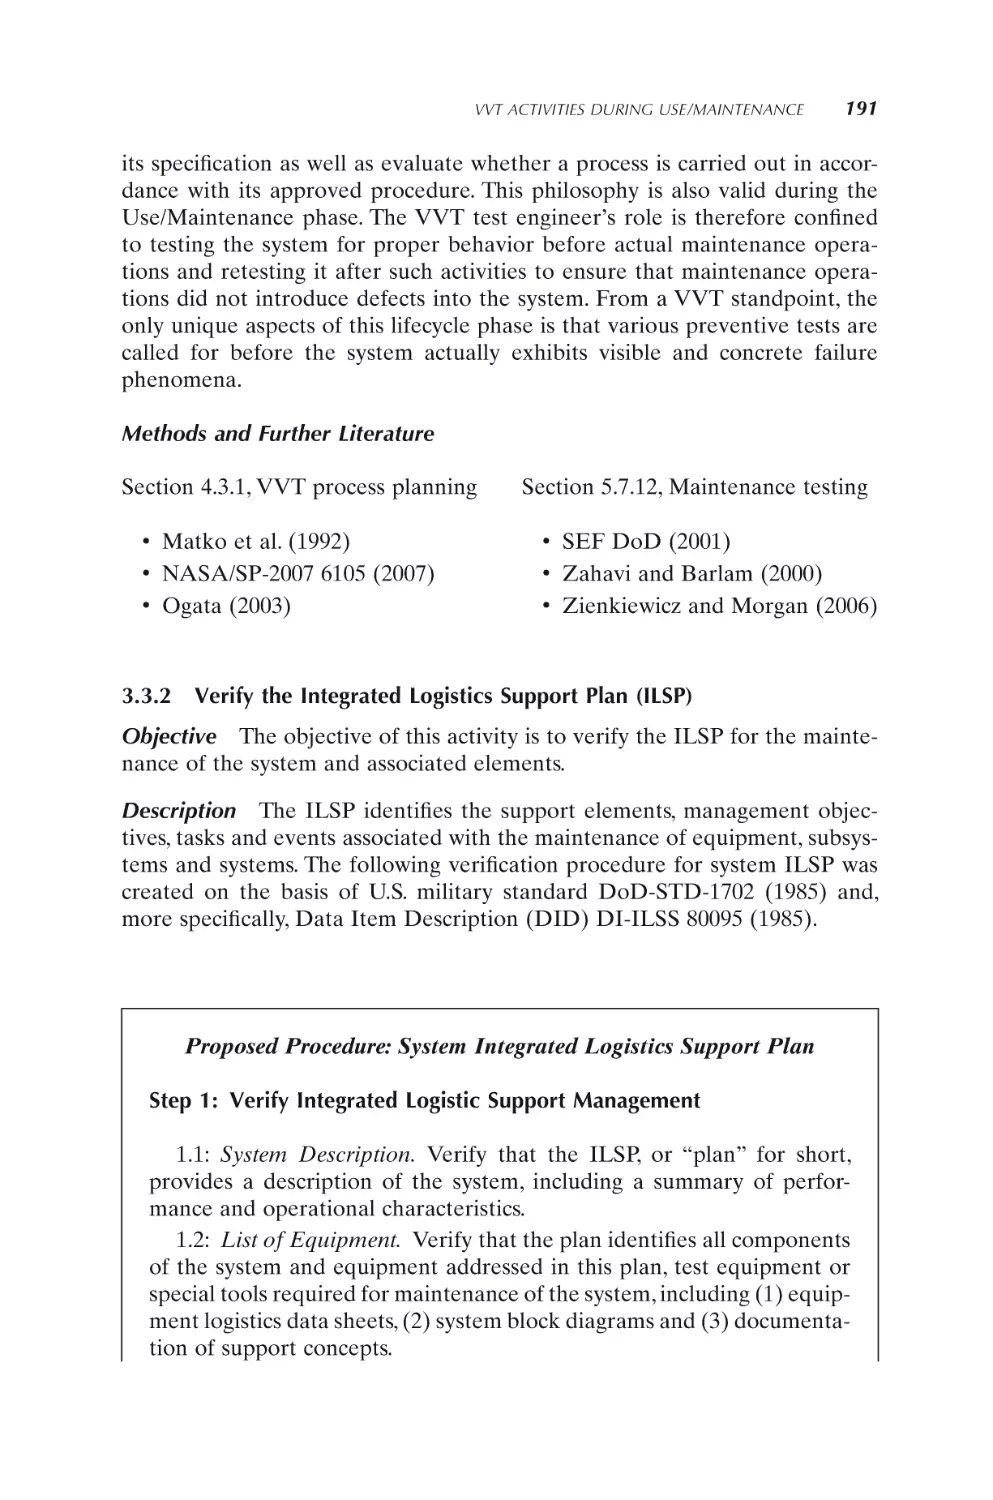 3.3.2 Verify the Integrated Logistics Support Plan (ILSP)